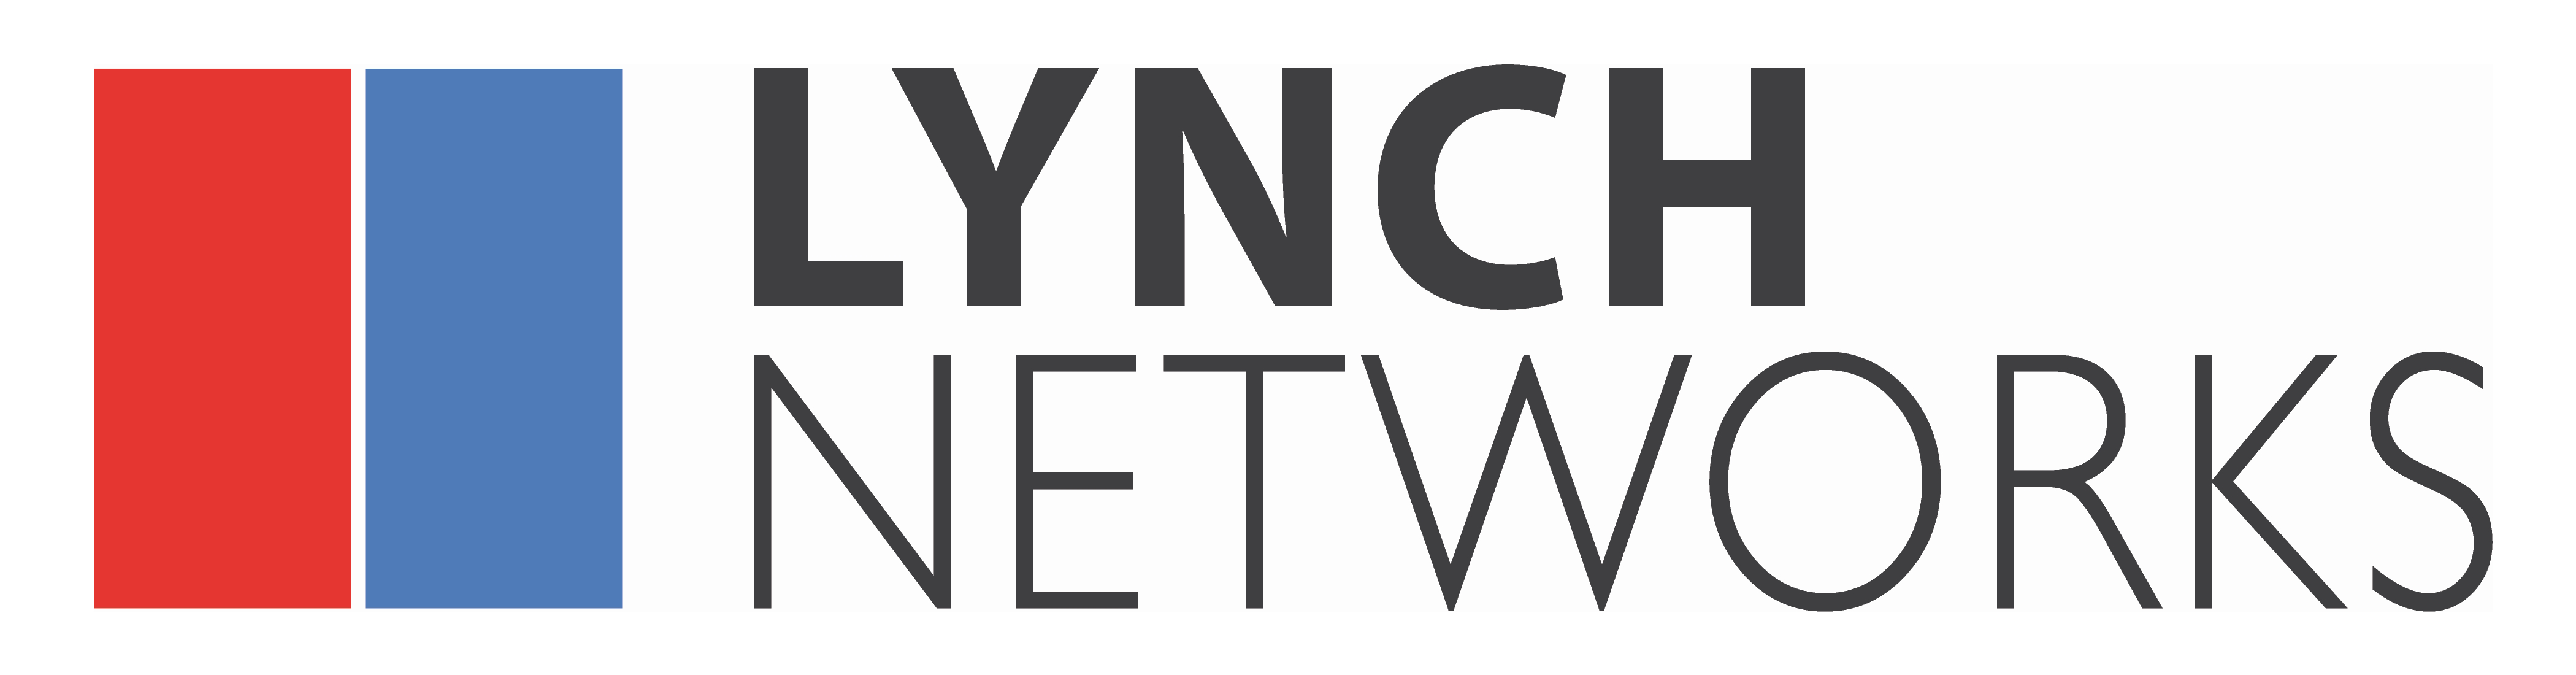 Lynch Networks logo